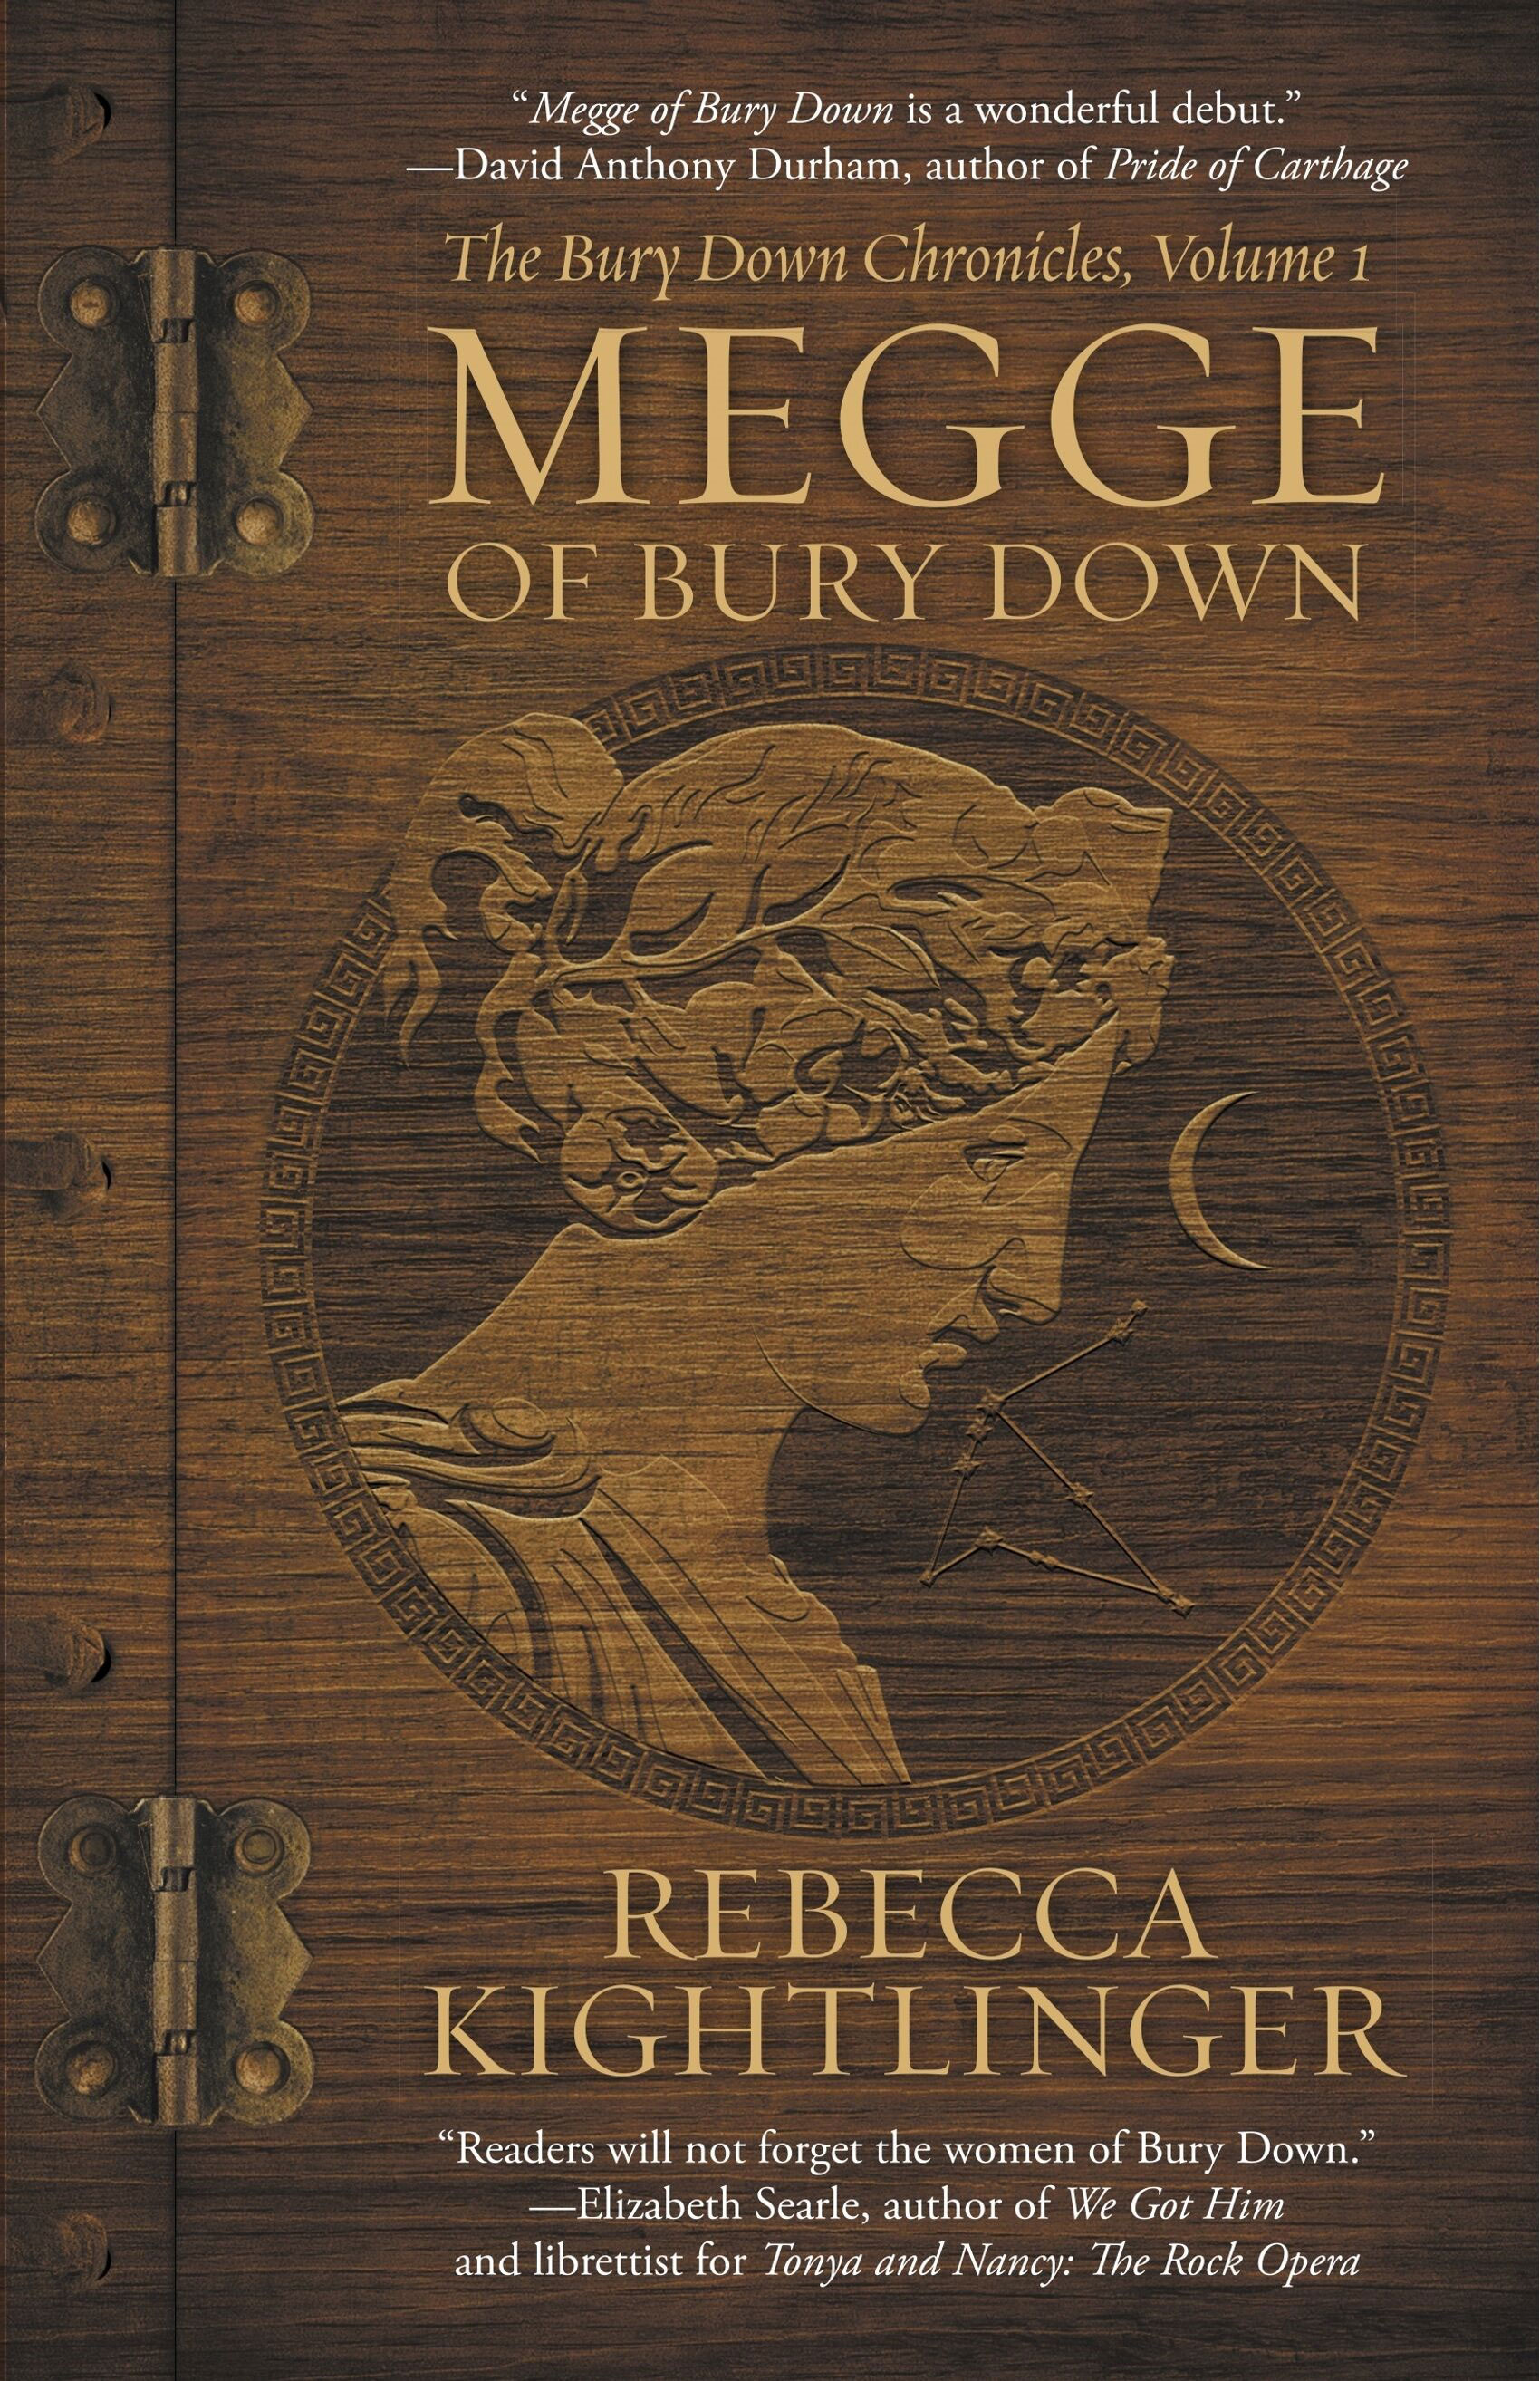 Megge of Bury Down